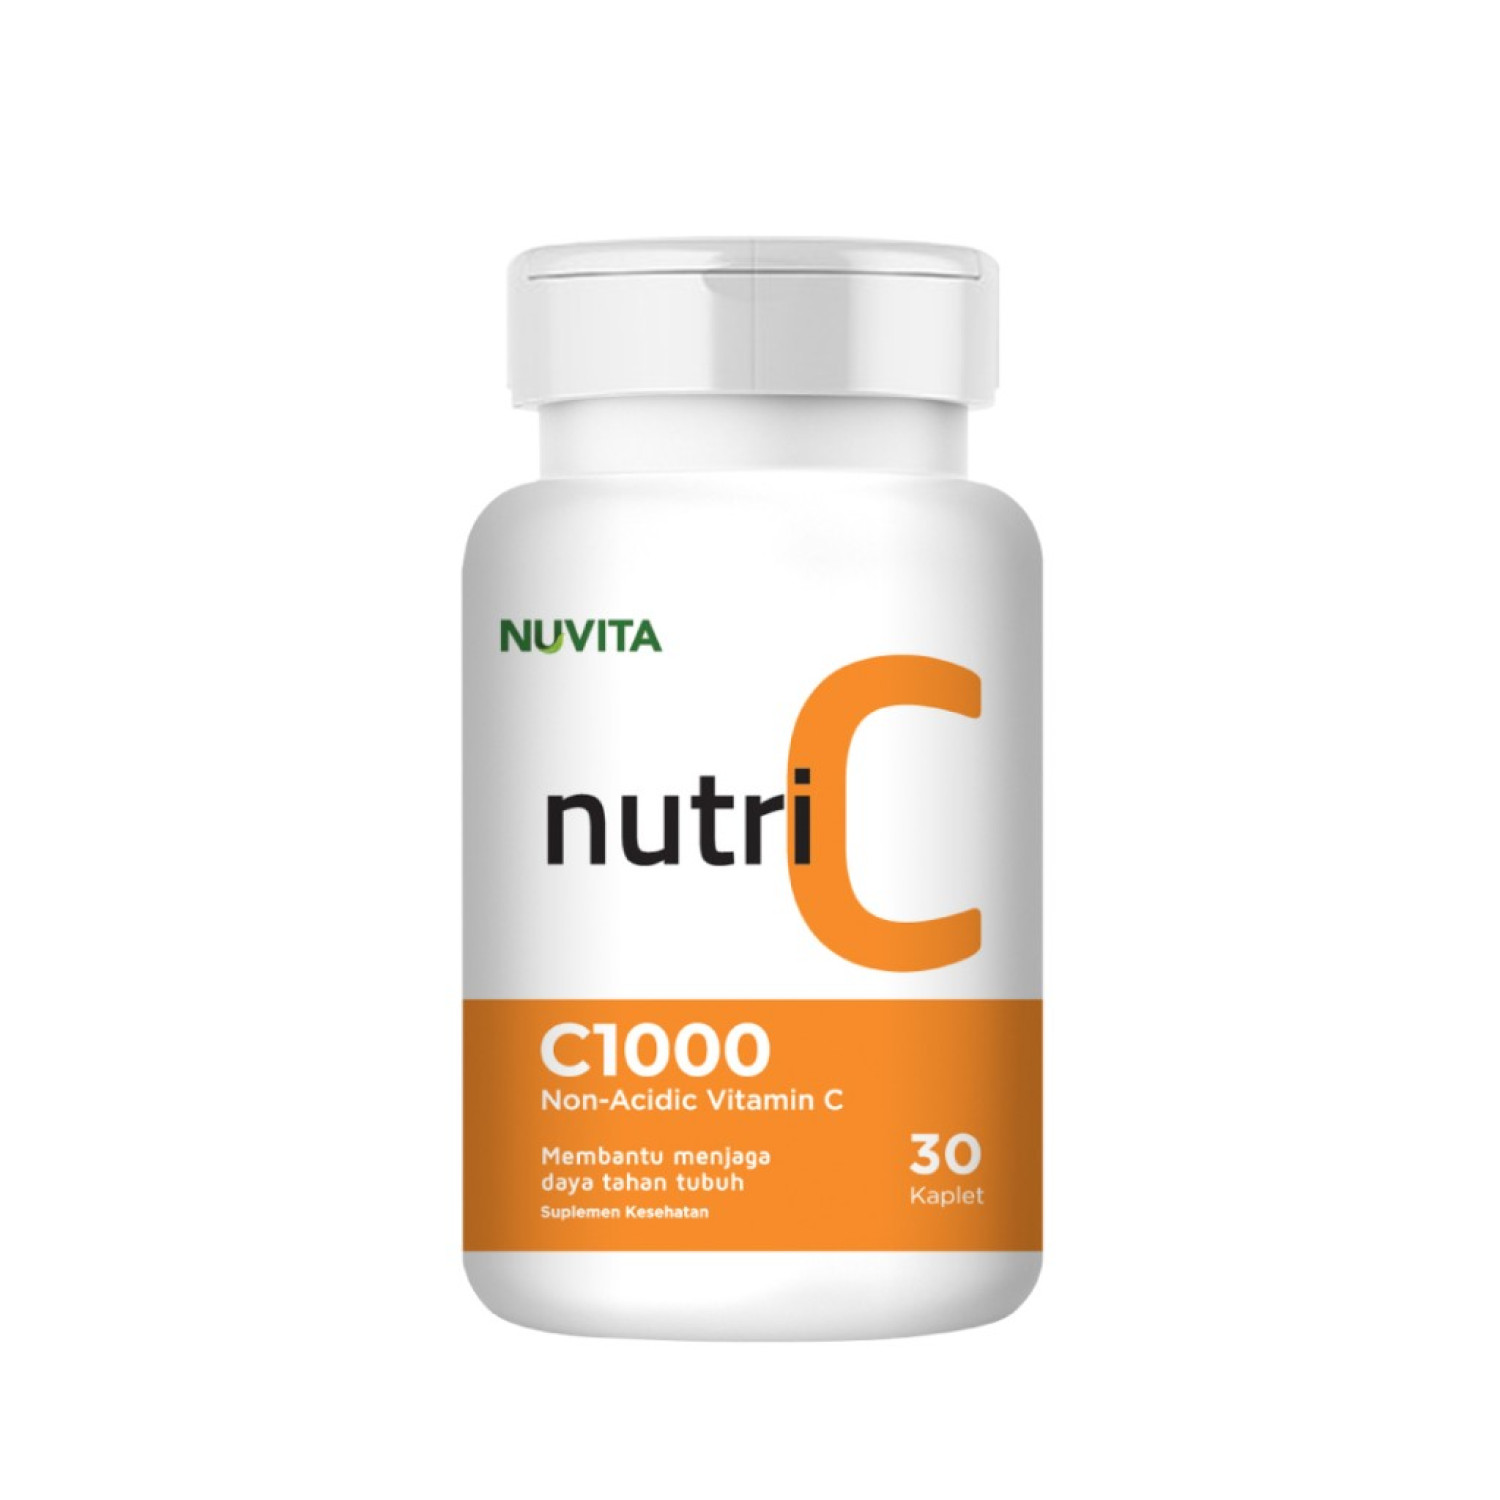 nuvita-nutri-c-1000-mg-30-kaplet-exp-date-0324-654b5b46b873b.jpeg